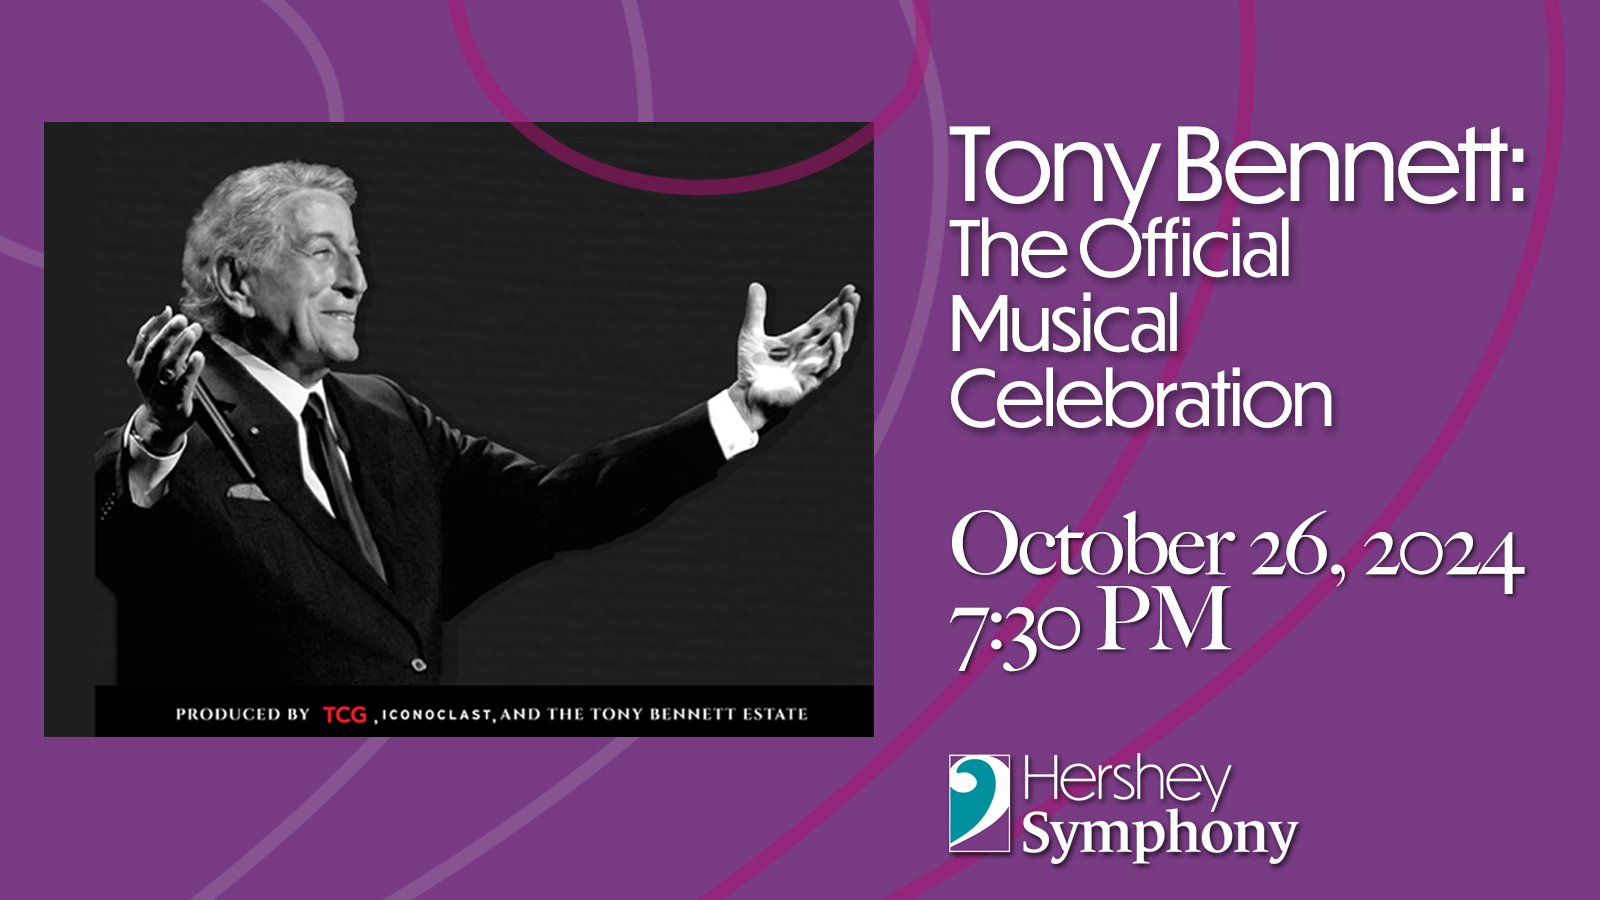 Tony Bennett Official Musical Celebration October 26 at 7:30 PM